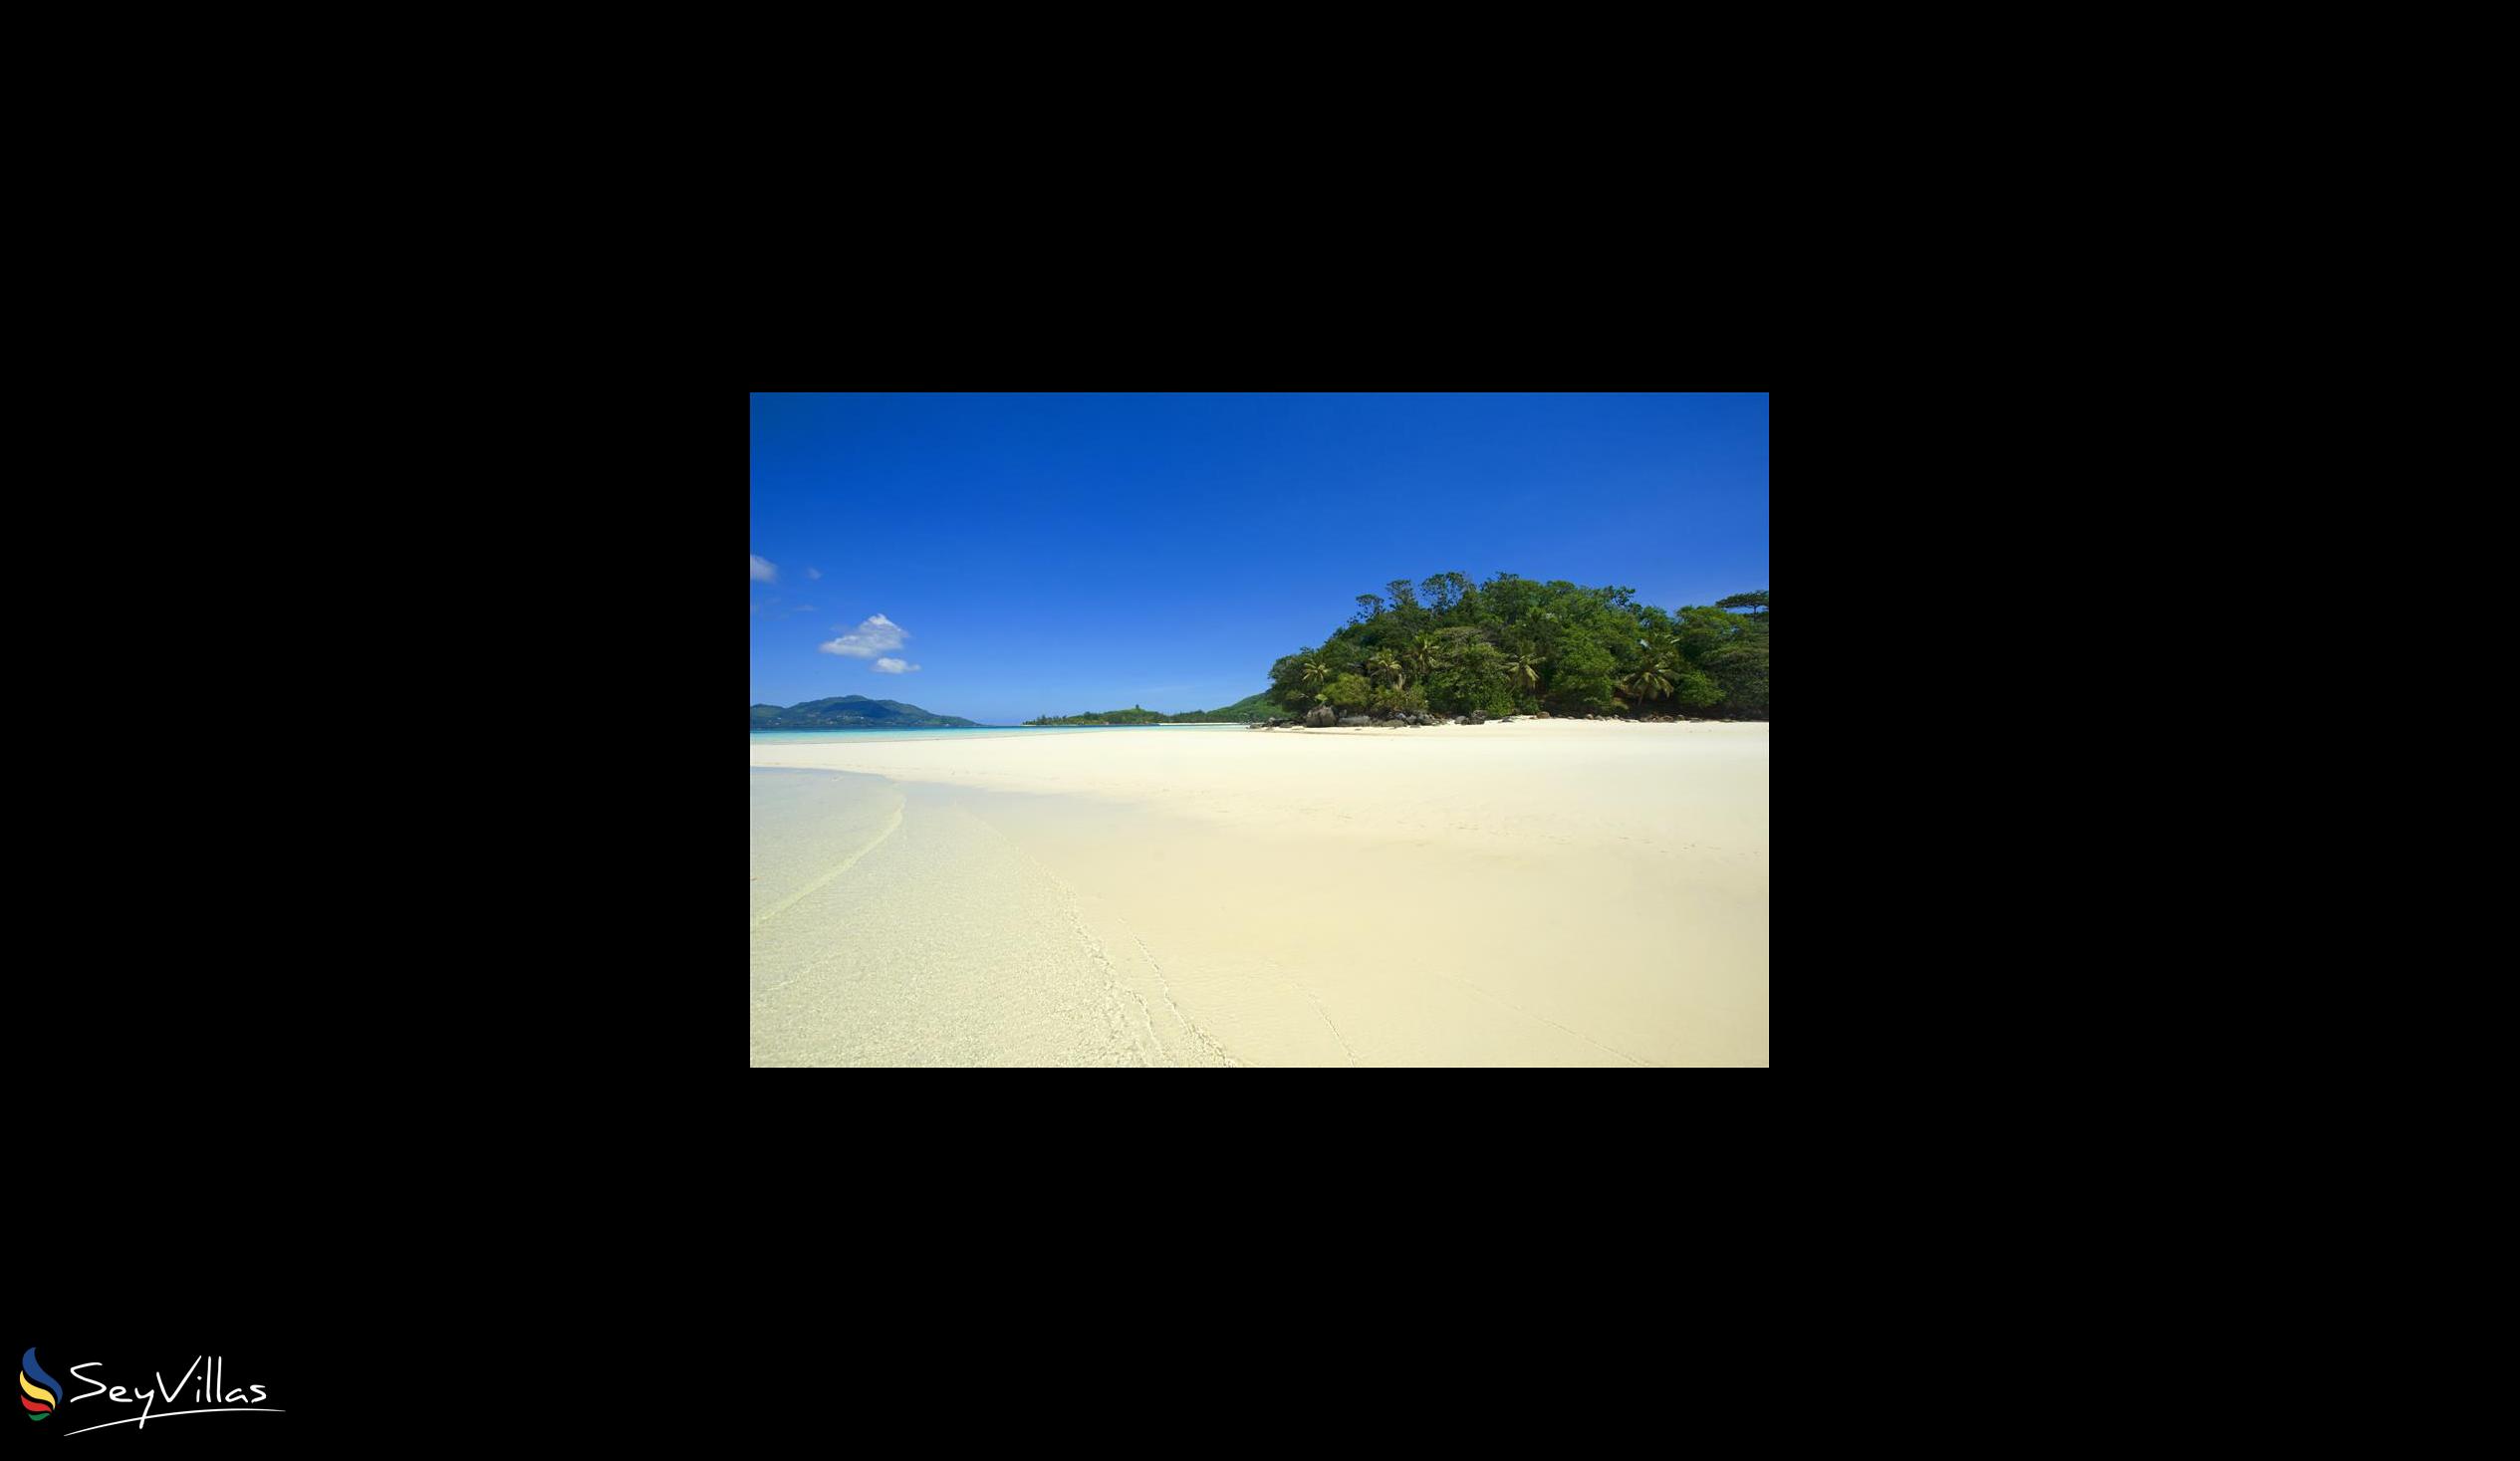 Photo 56: JA Enchanted Island Resort - Beaches - Round Island (Seychelles)